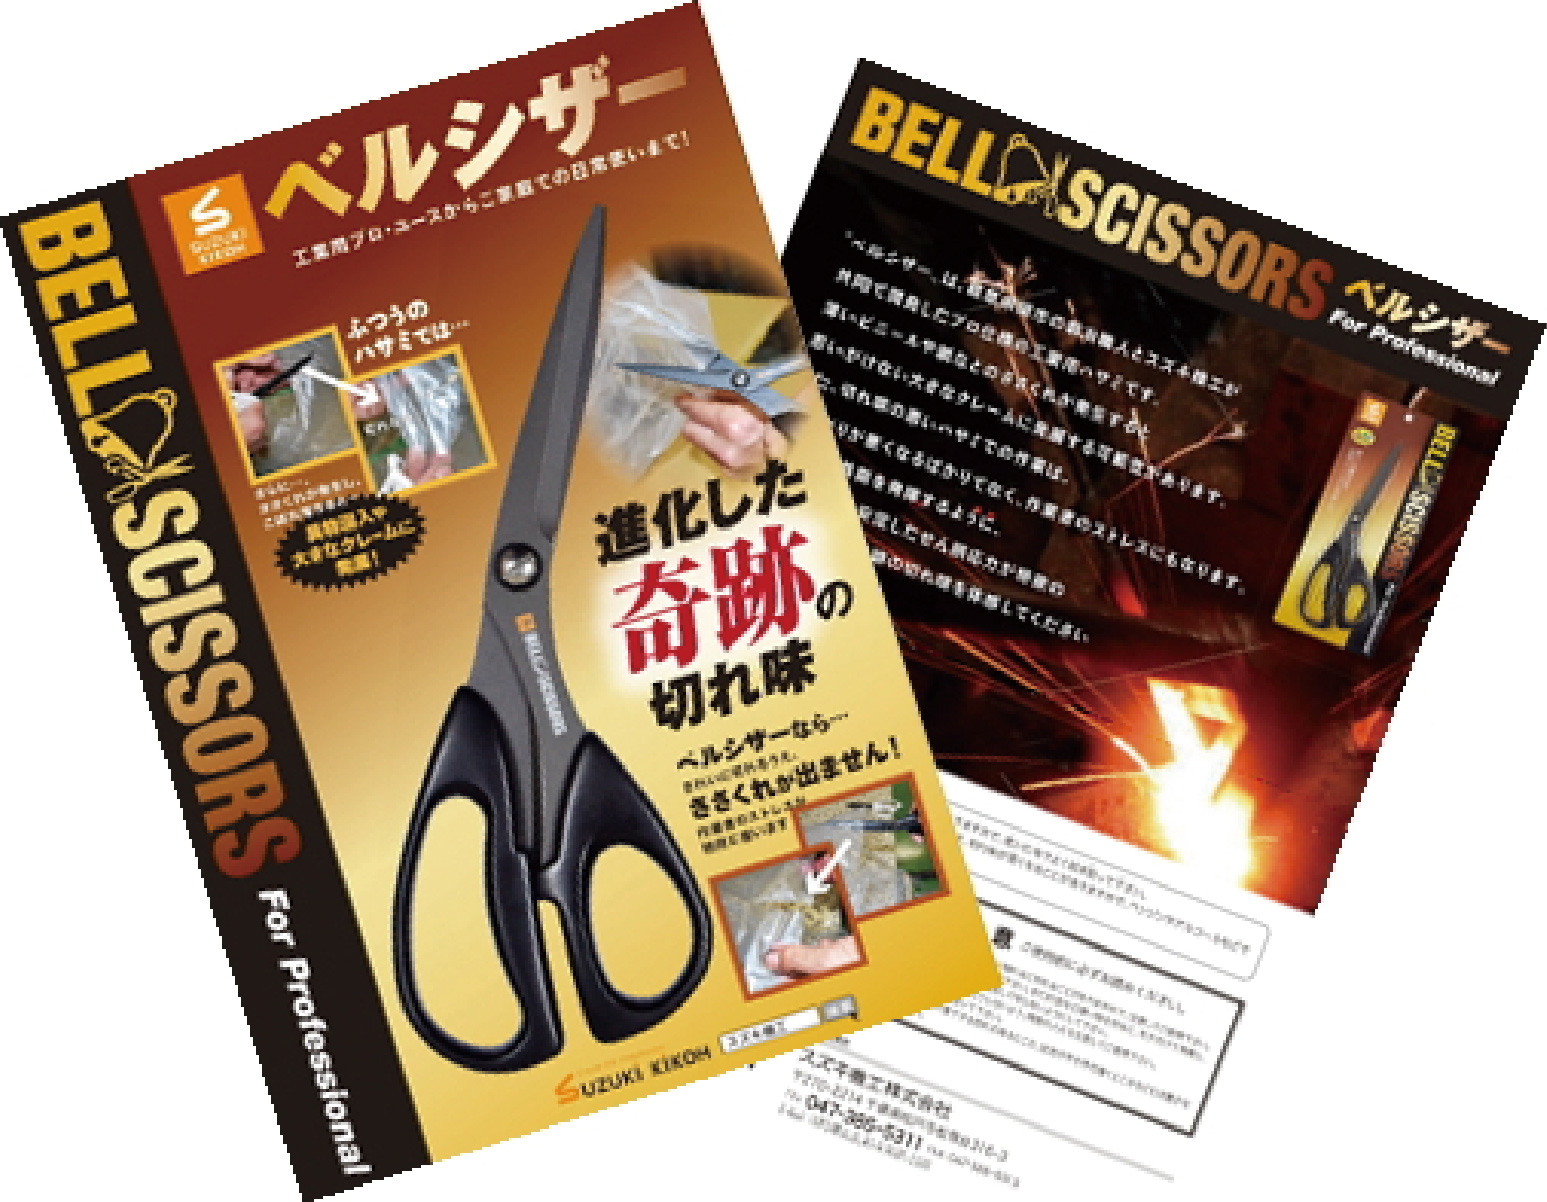 BELL SCISSORS catalog image